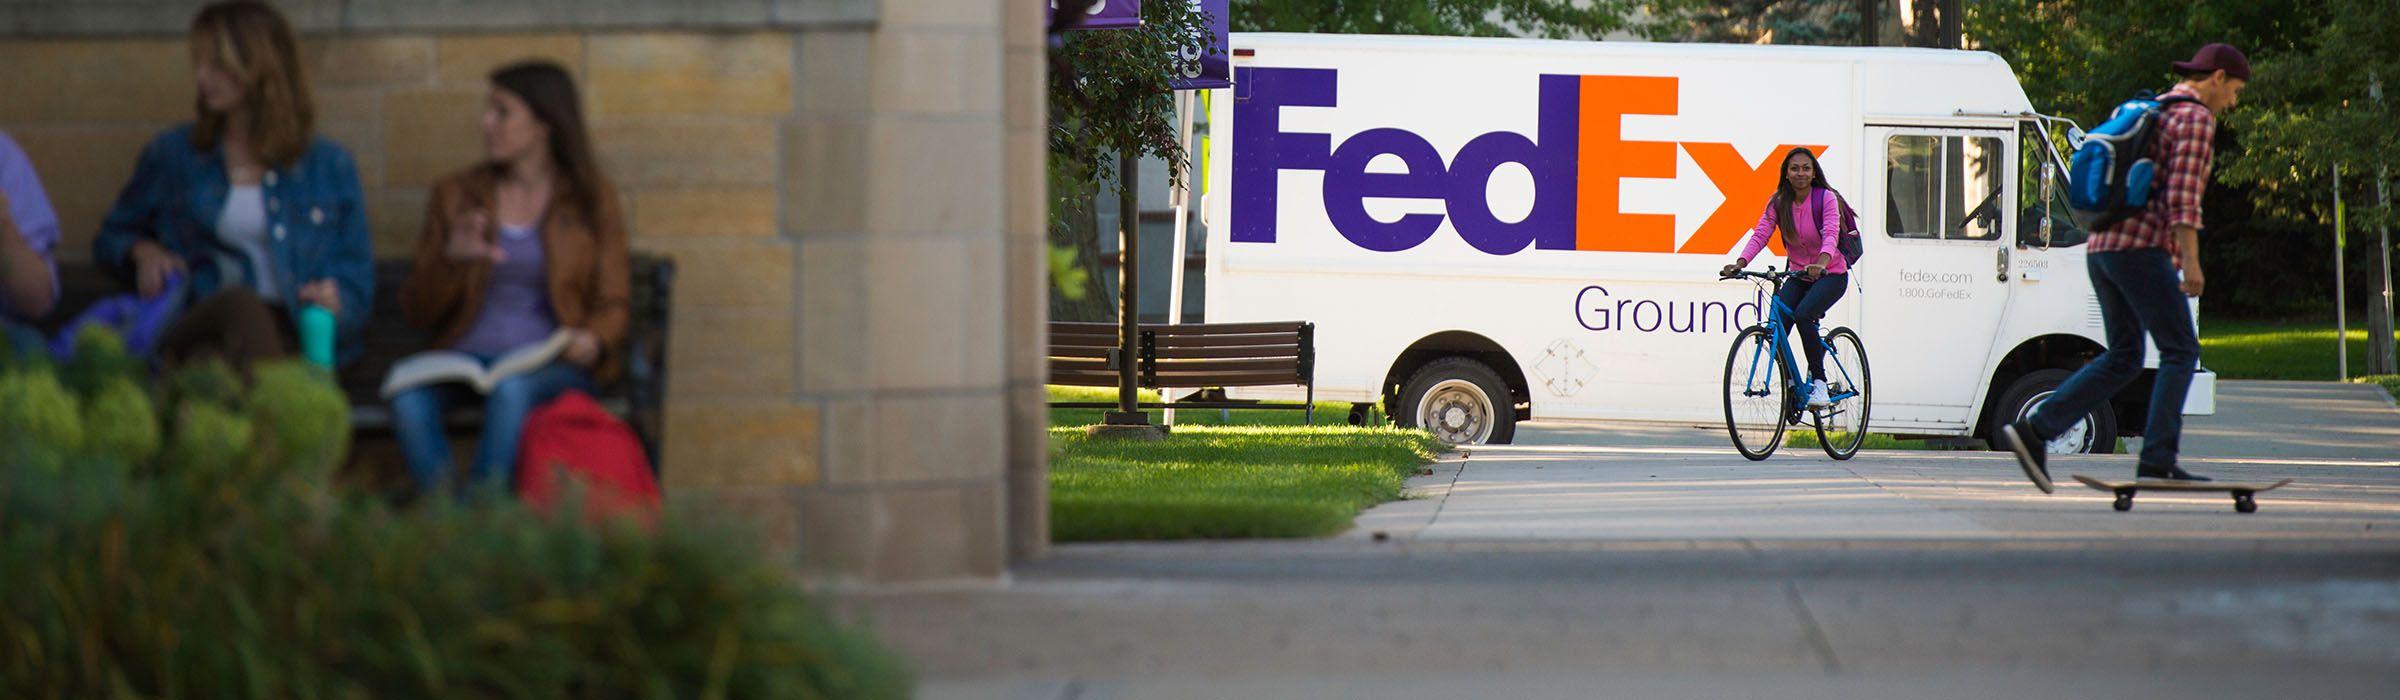 FedEx Ground Home Delivery Logo - FedEx Ground | FedEx